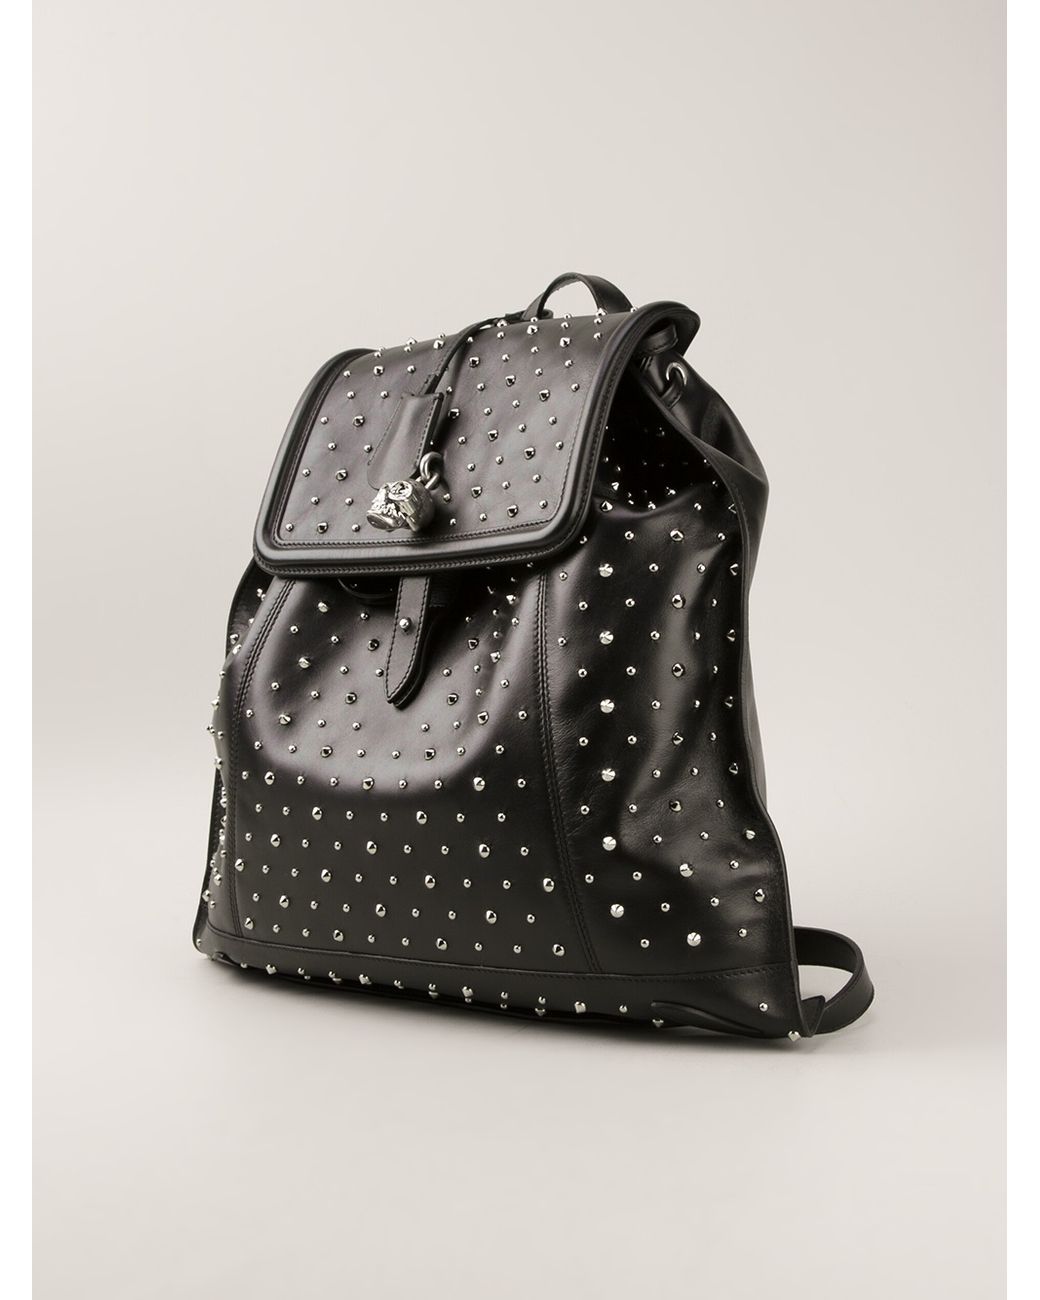 Alexander McQueen Studded Backpack in Black | Lyst